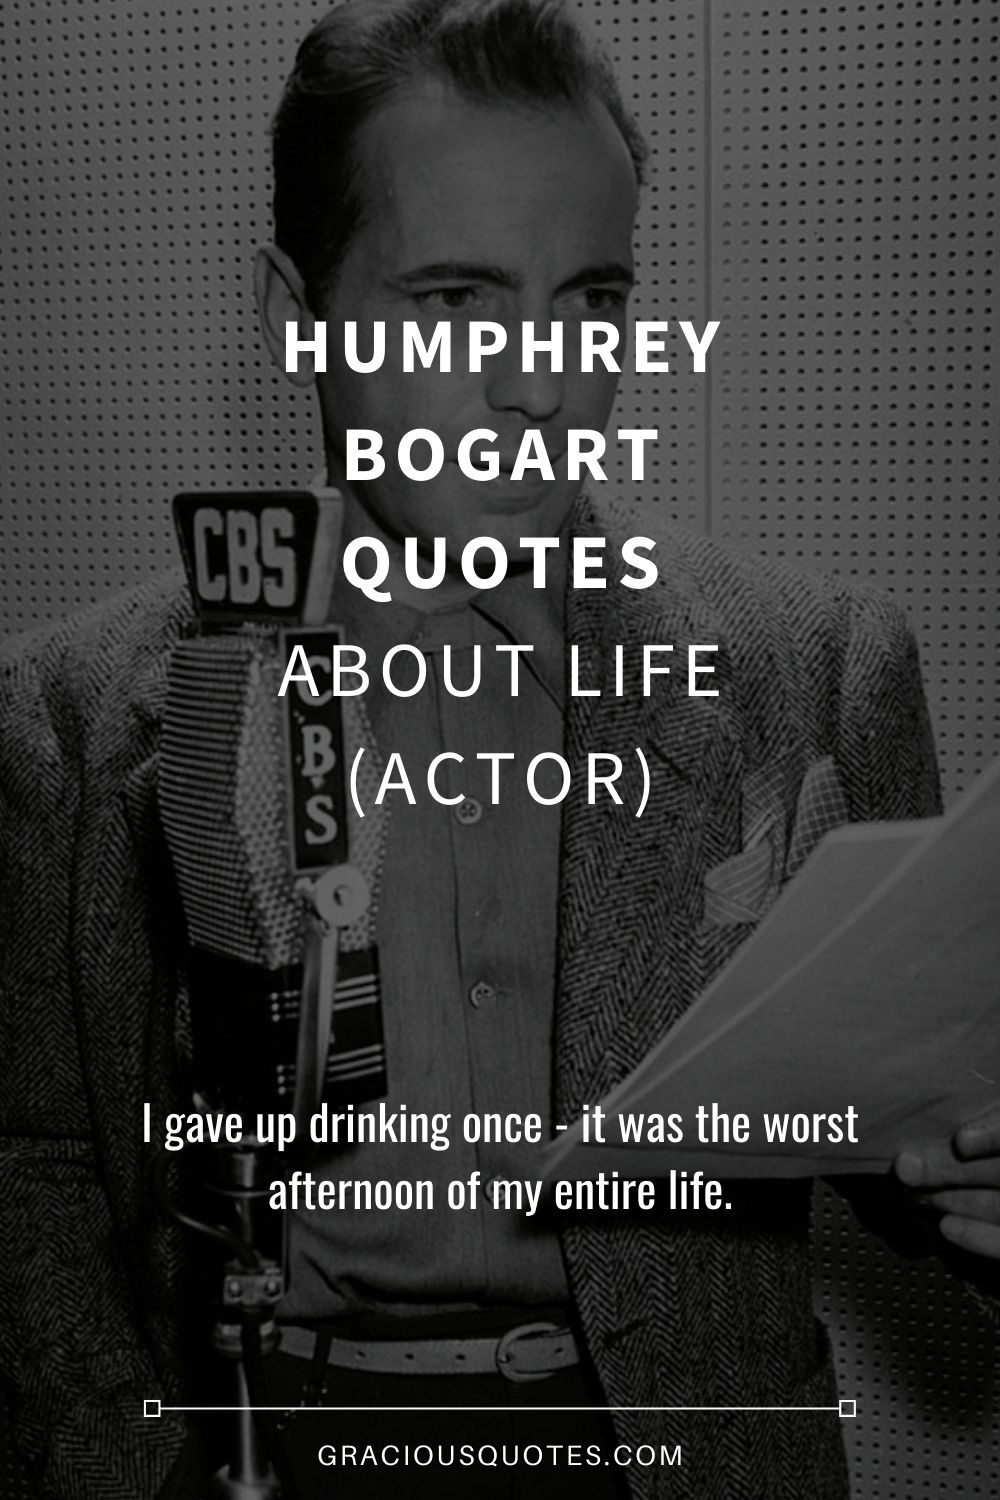 Humphrey Bogart Quotes About Life (ACTOR) - Gracious Quotes